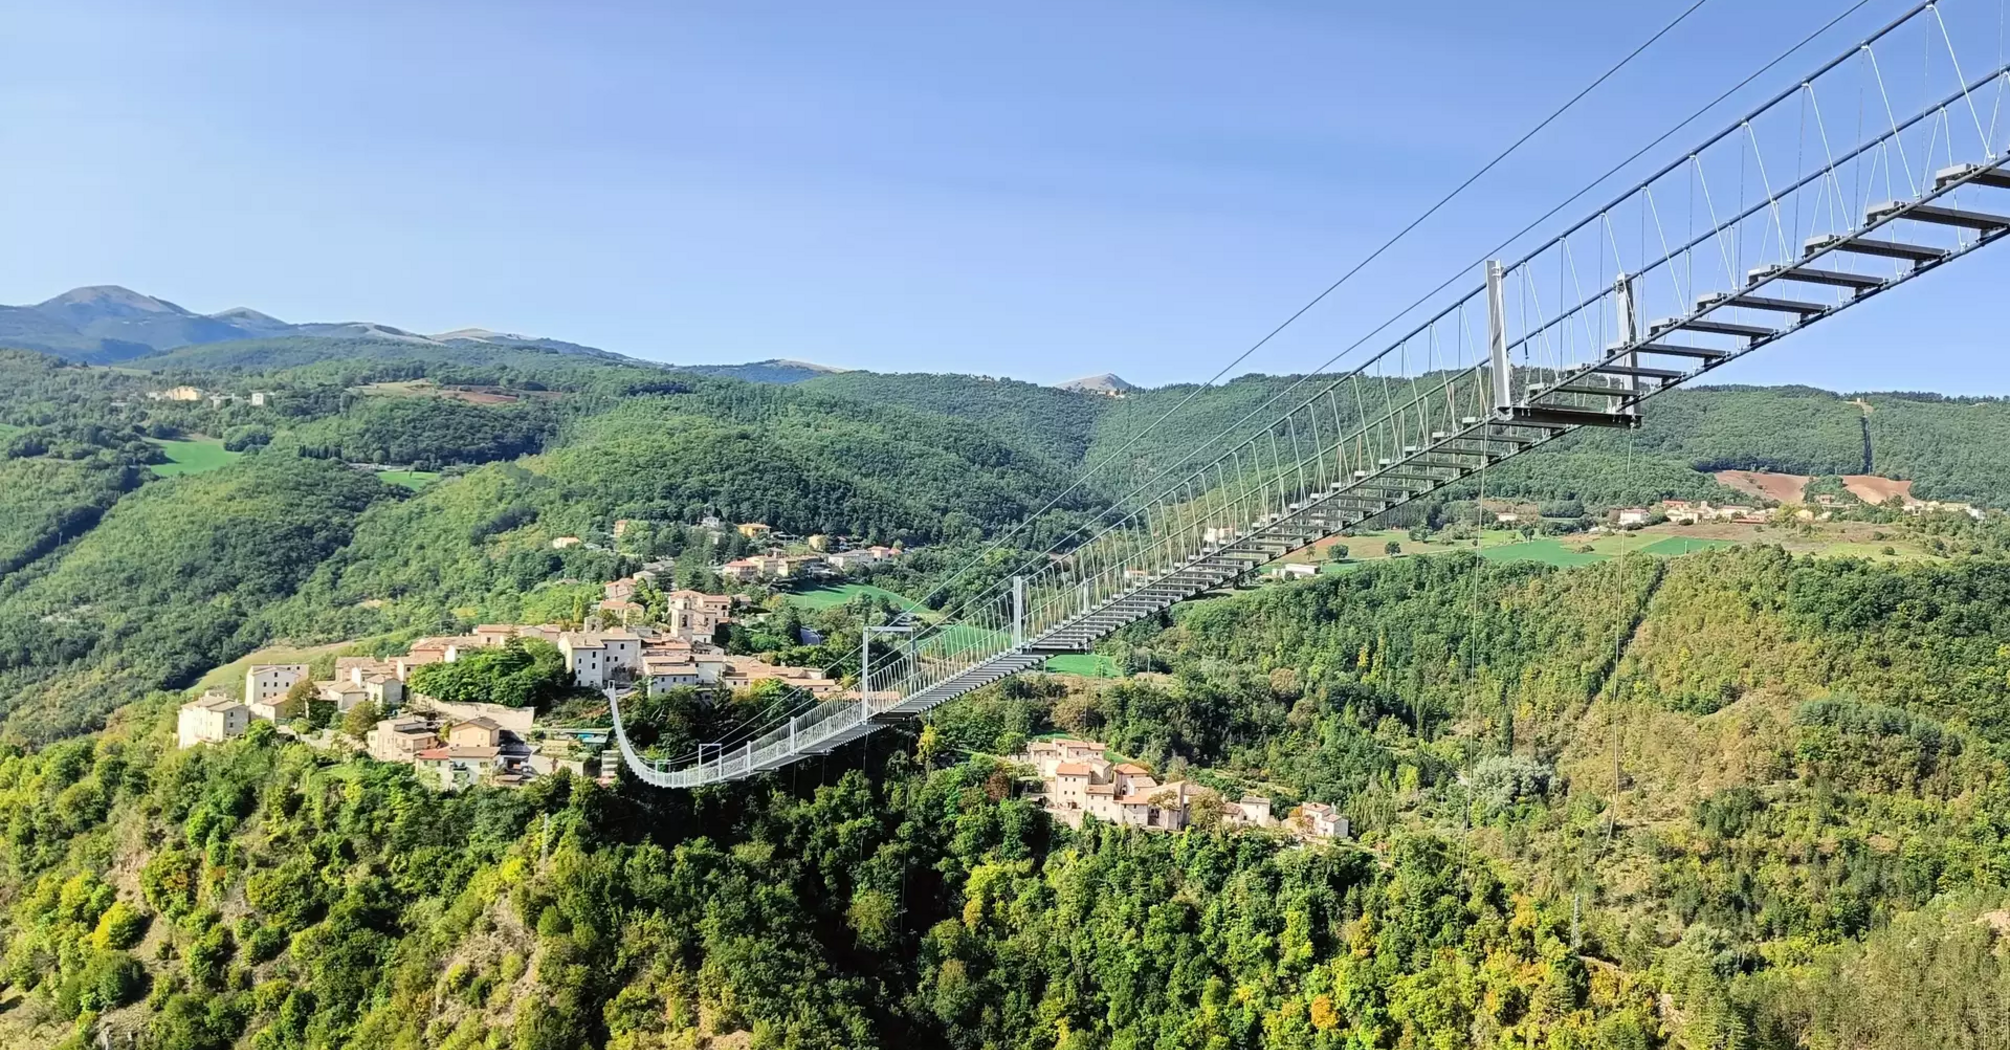 Europe's highest Tibetan bridge unveiled in a mountainous region of Italy